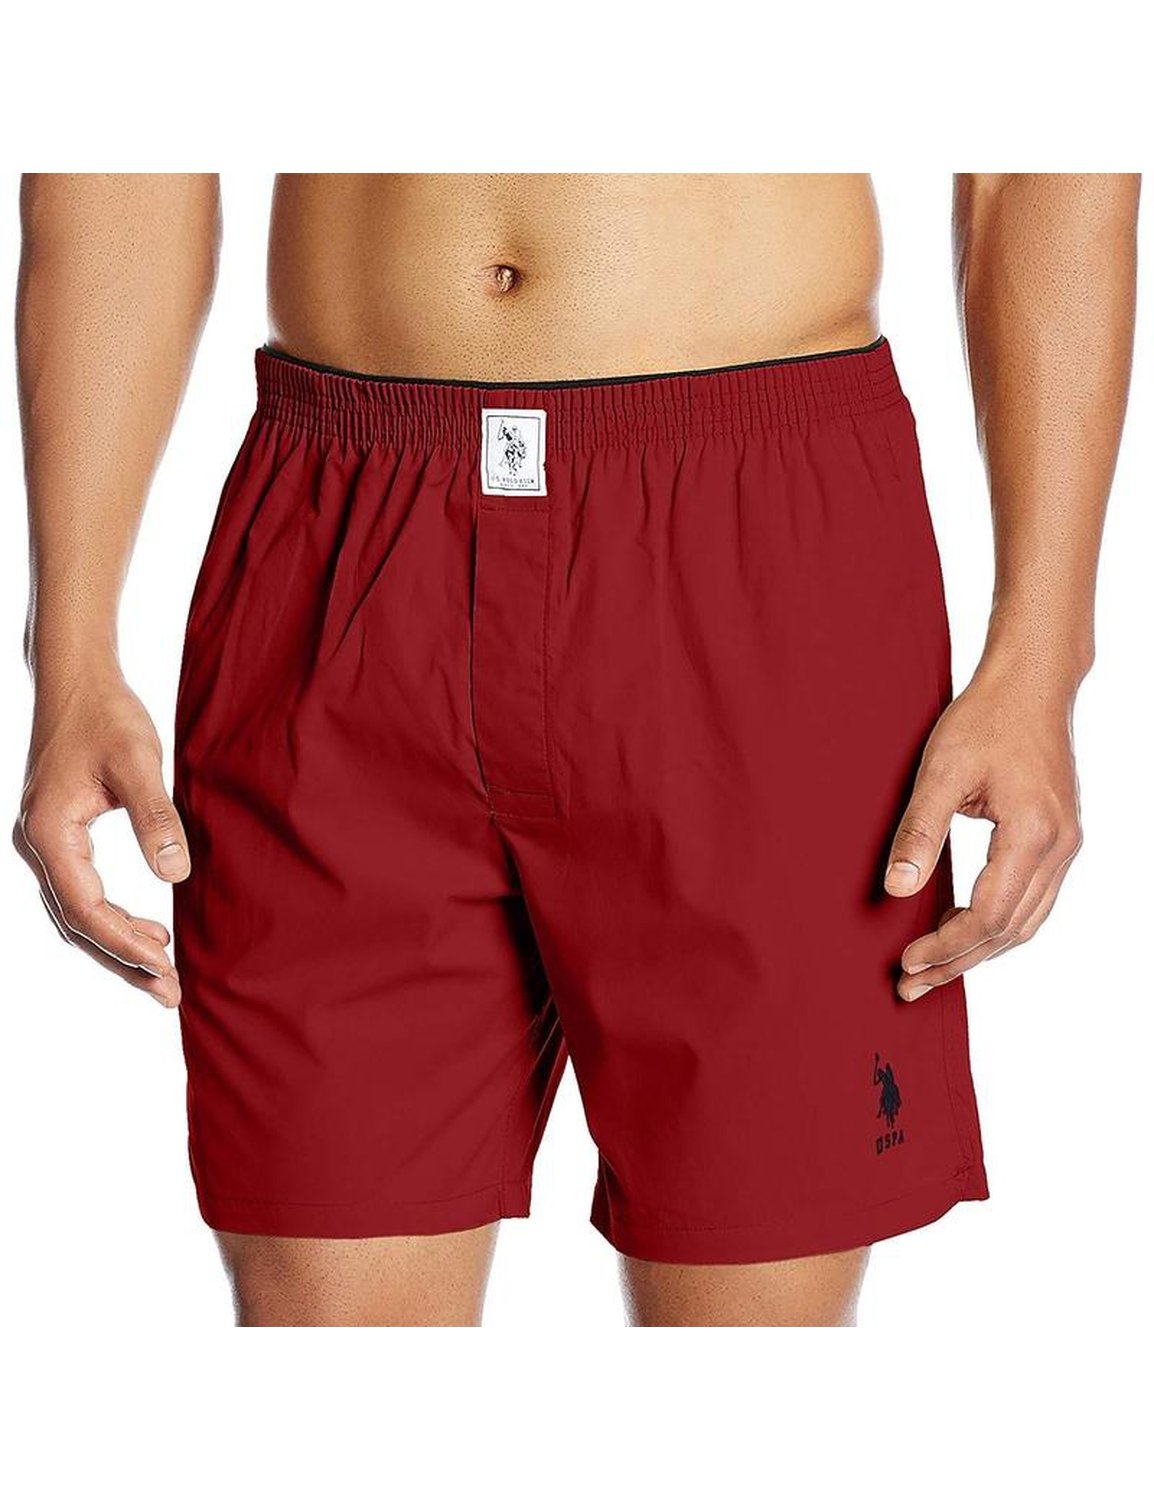 US Polo Cotton Red Boxer Shorts for Men - Stilento